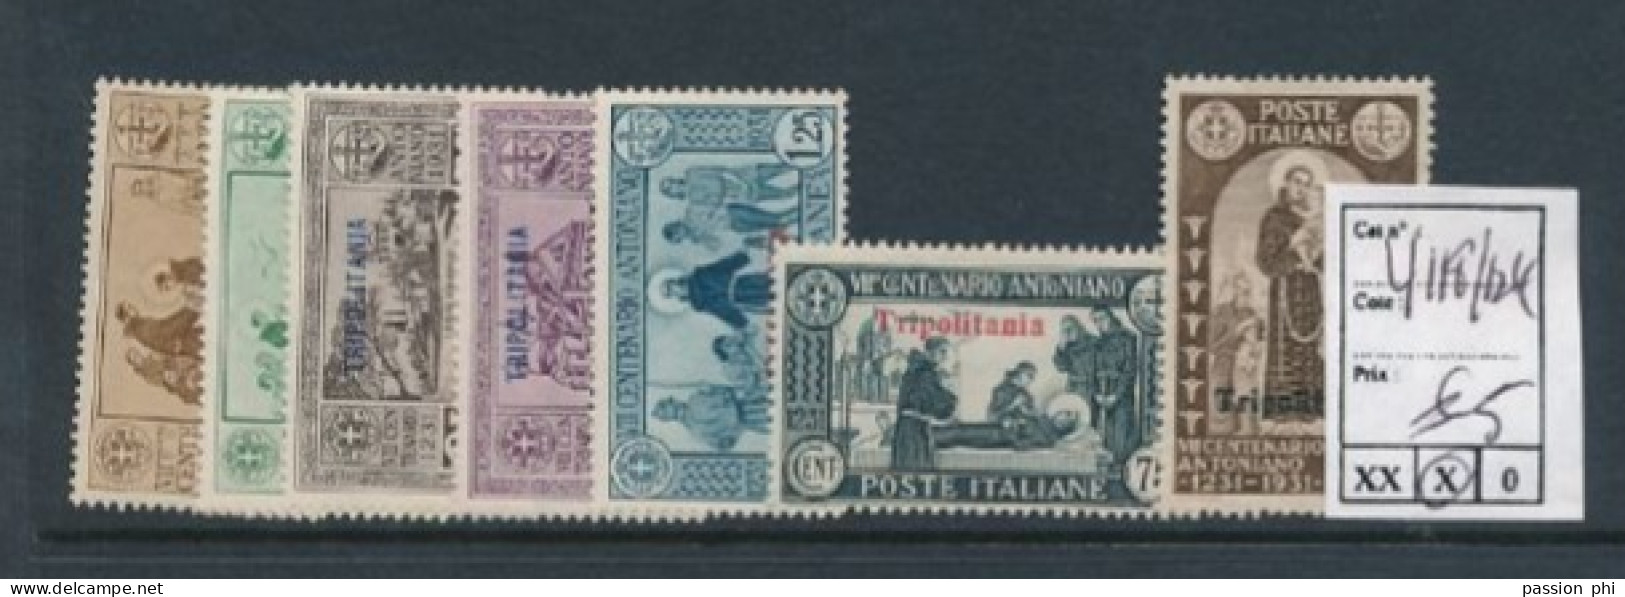 B5 ITALY TRIPOLITANIA YVERT 118/124 LH - Italian Eastern Africa